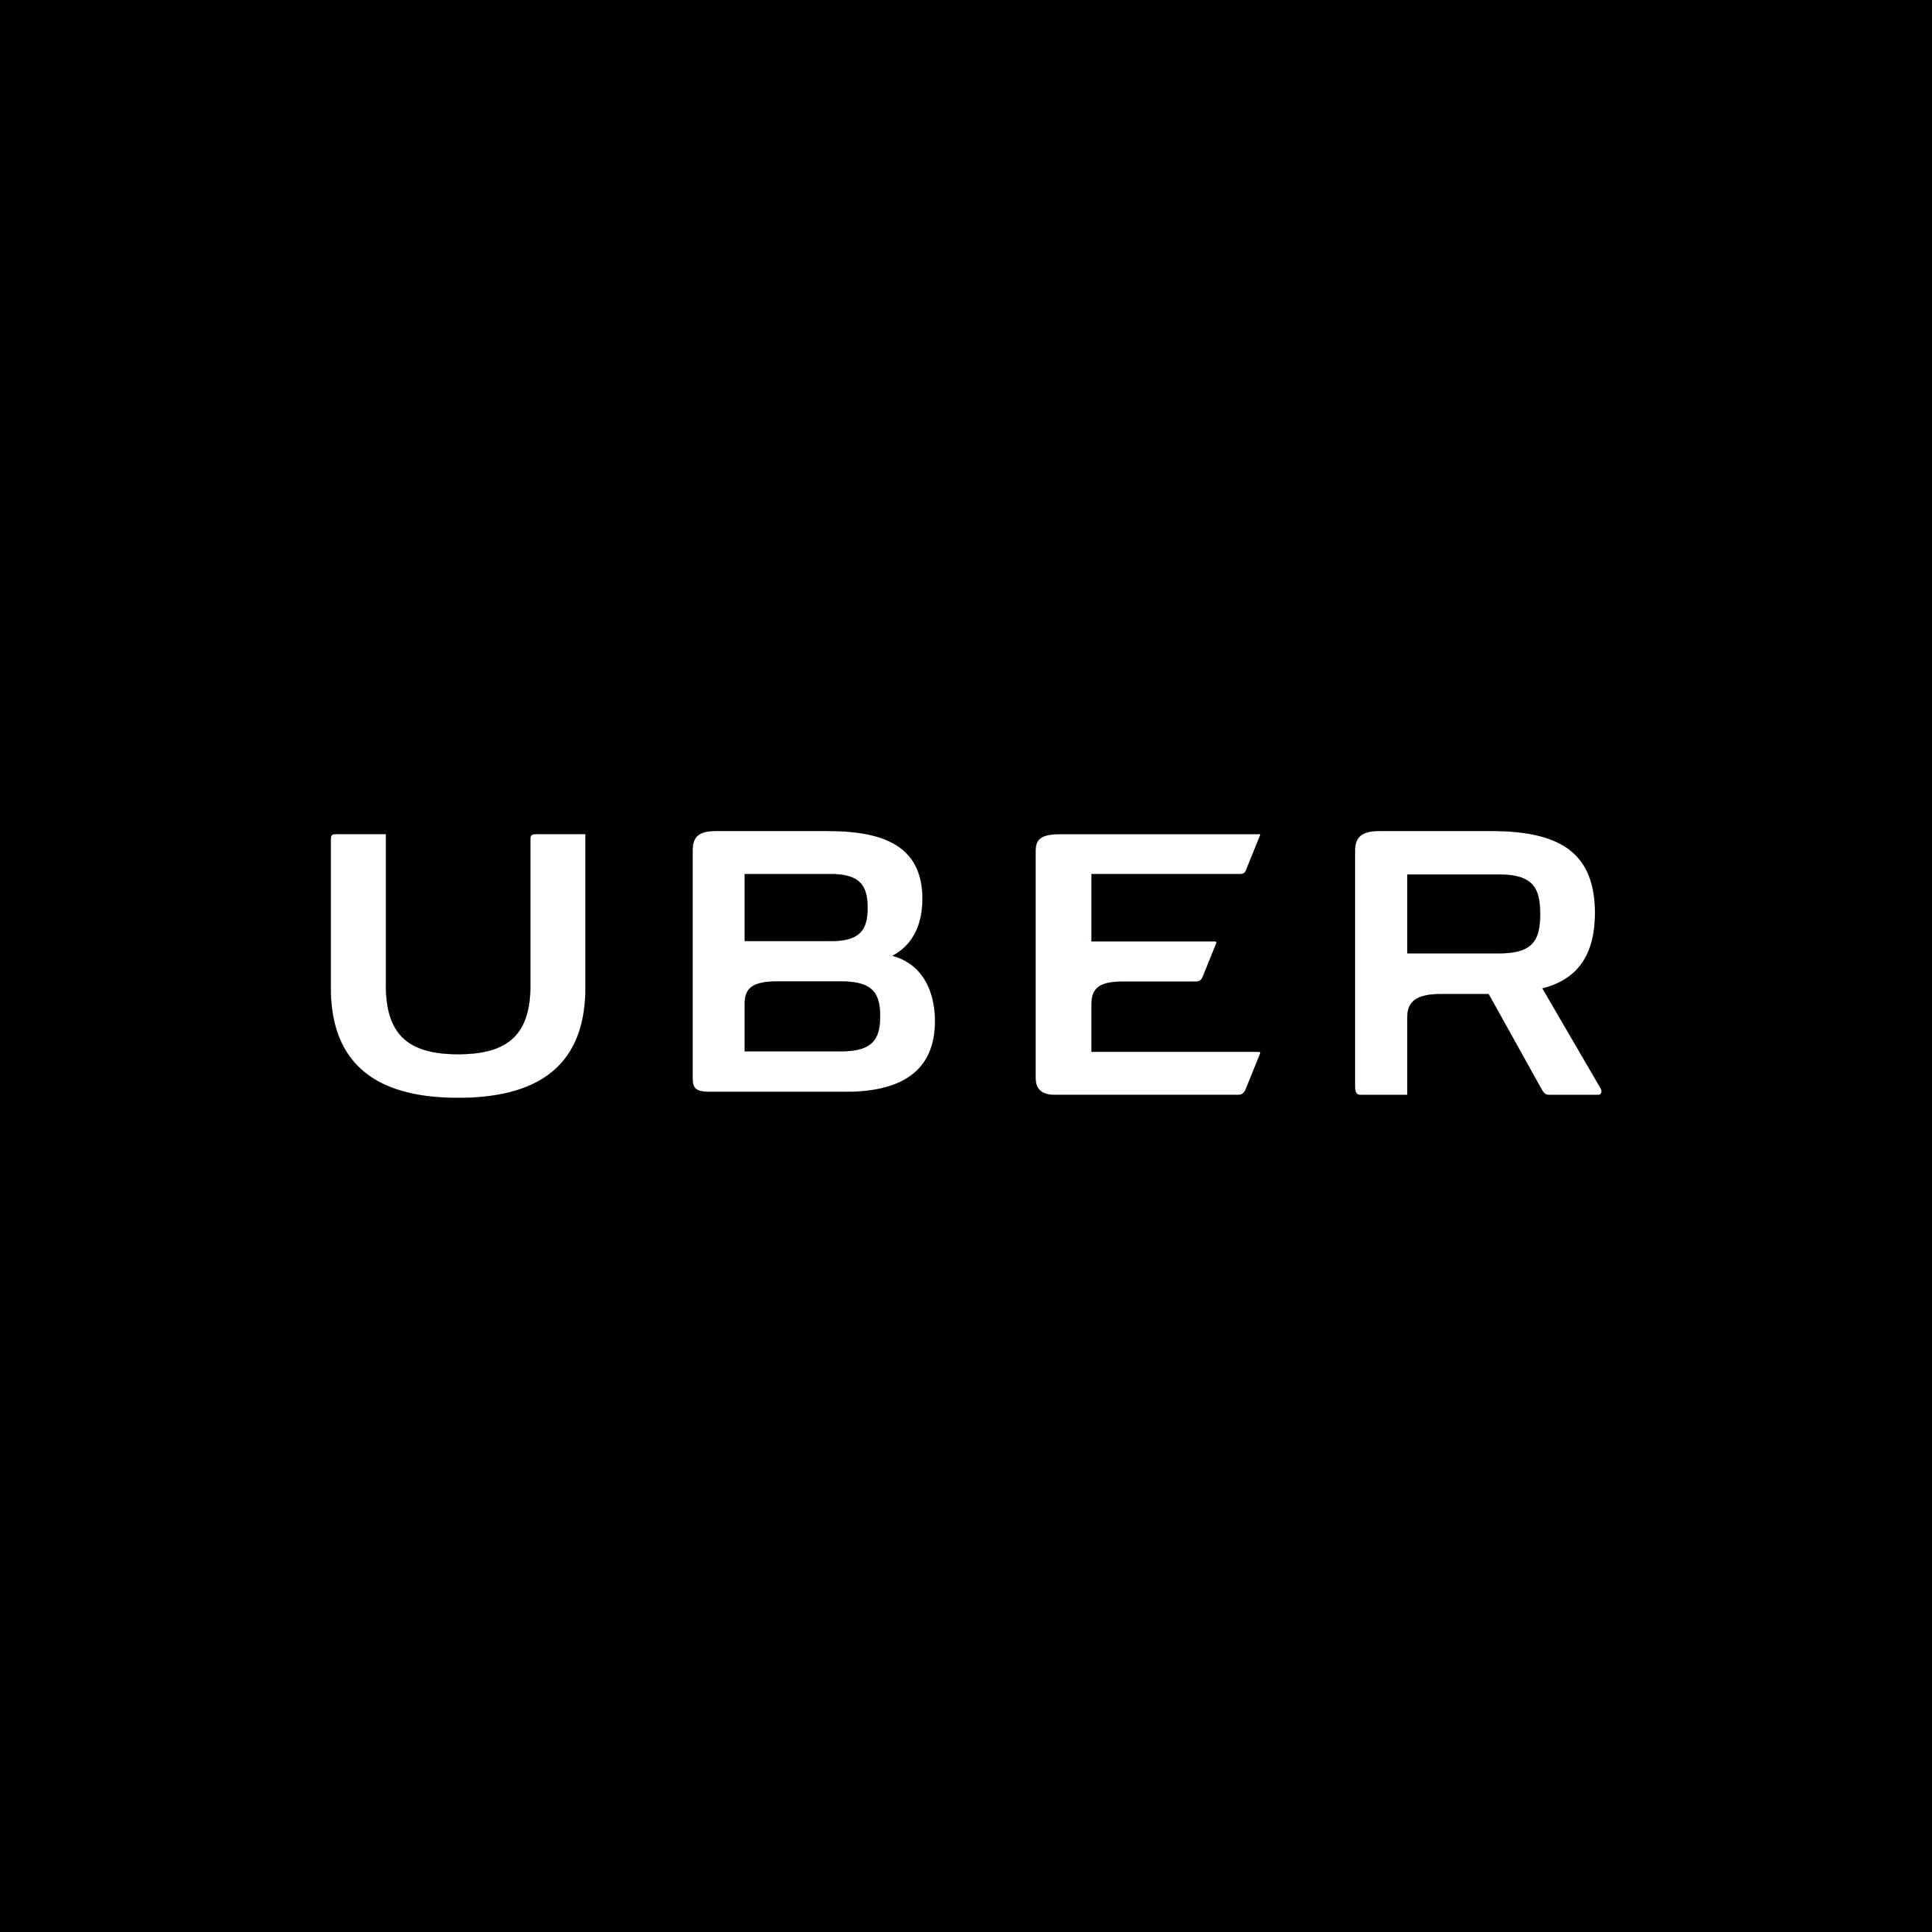 40₺ Uber Ankara İndirim Kodu